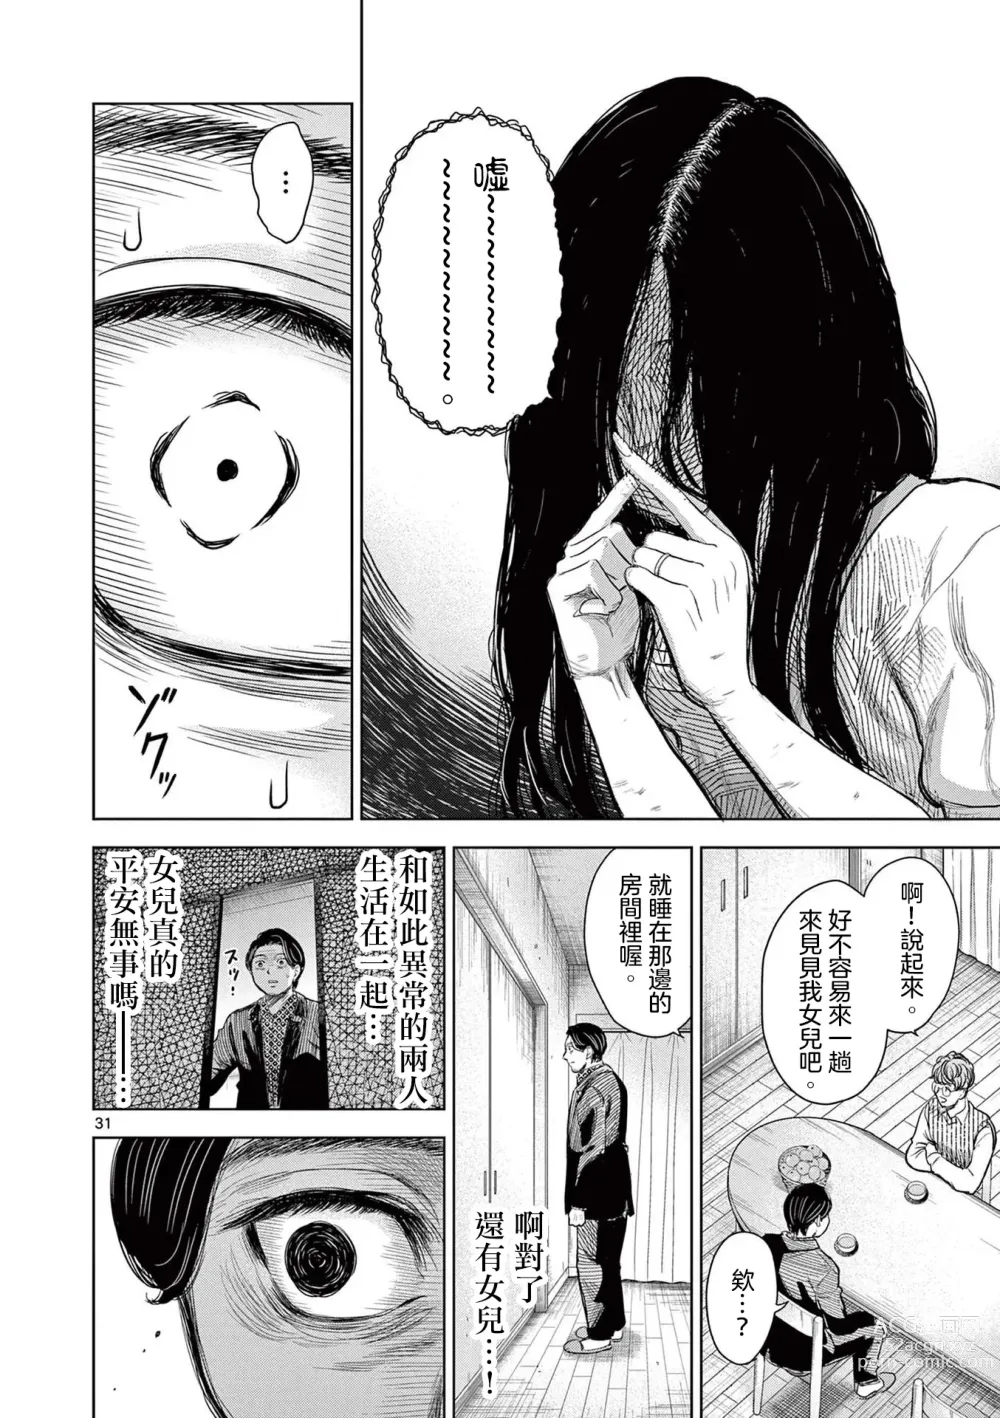 Page 37 of manga Iyadan Yobanashi Chinese]